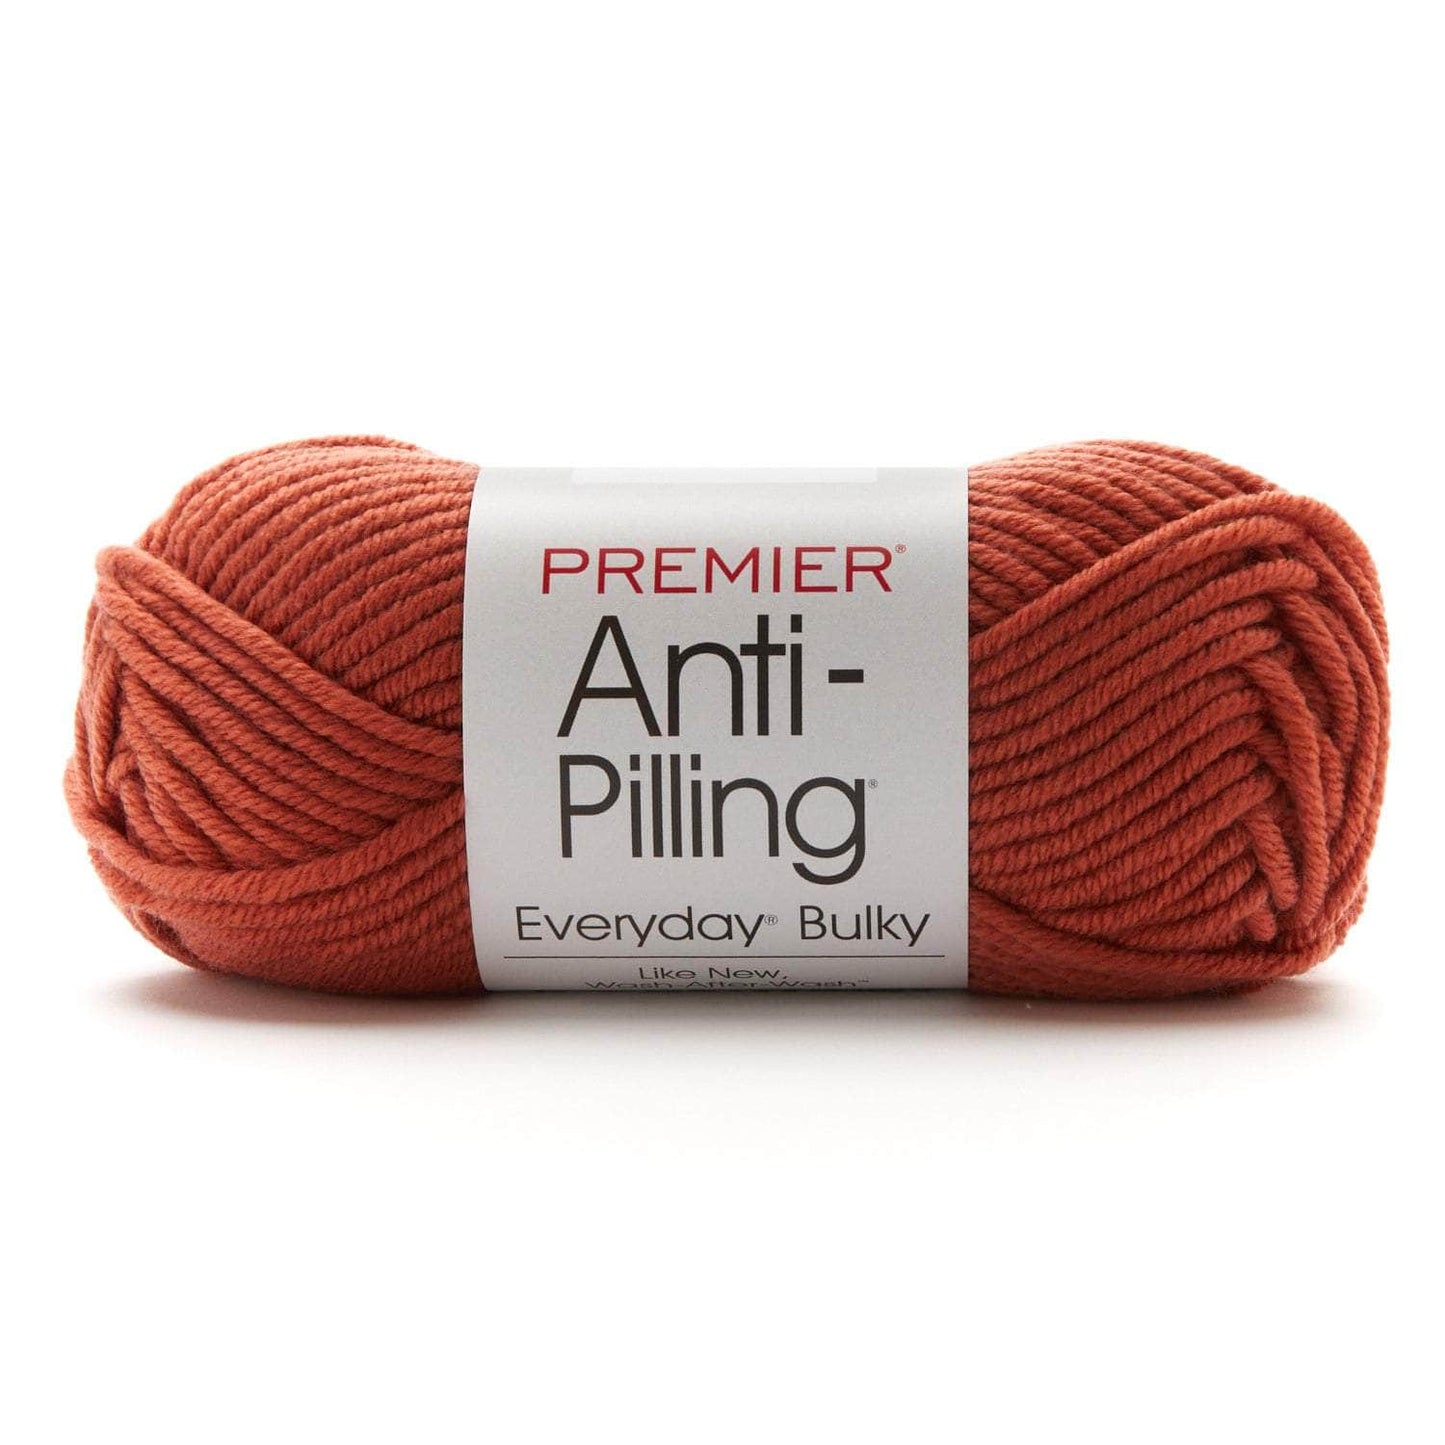 Premier Yarns Anti-Pilling Everyday Bulky Yarn Rust Pack of 3 *Pre-order*